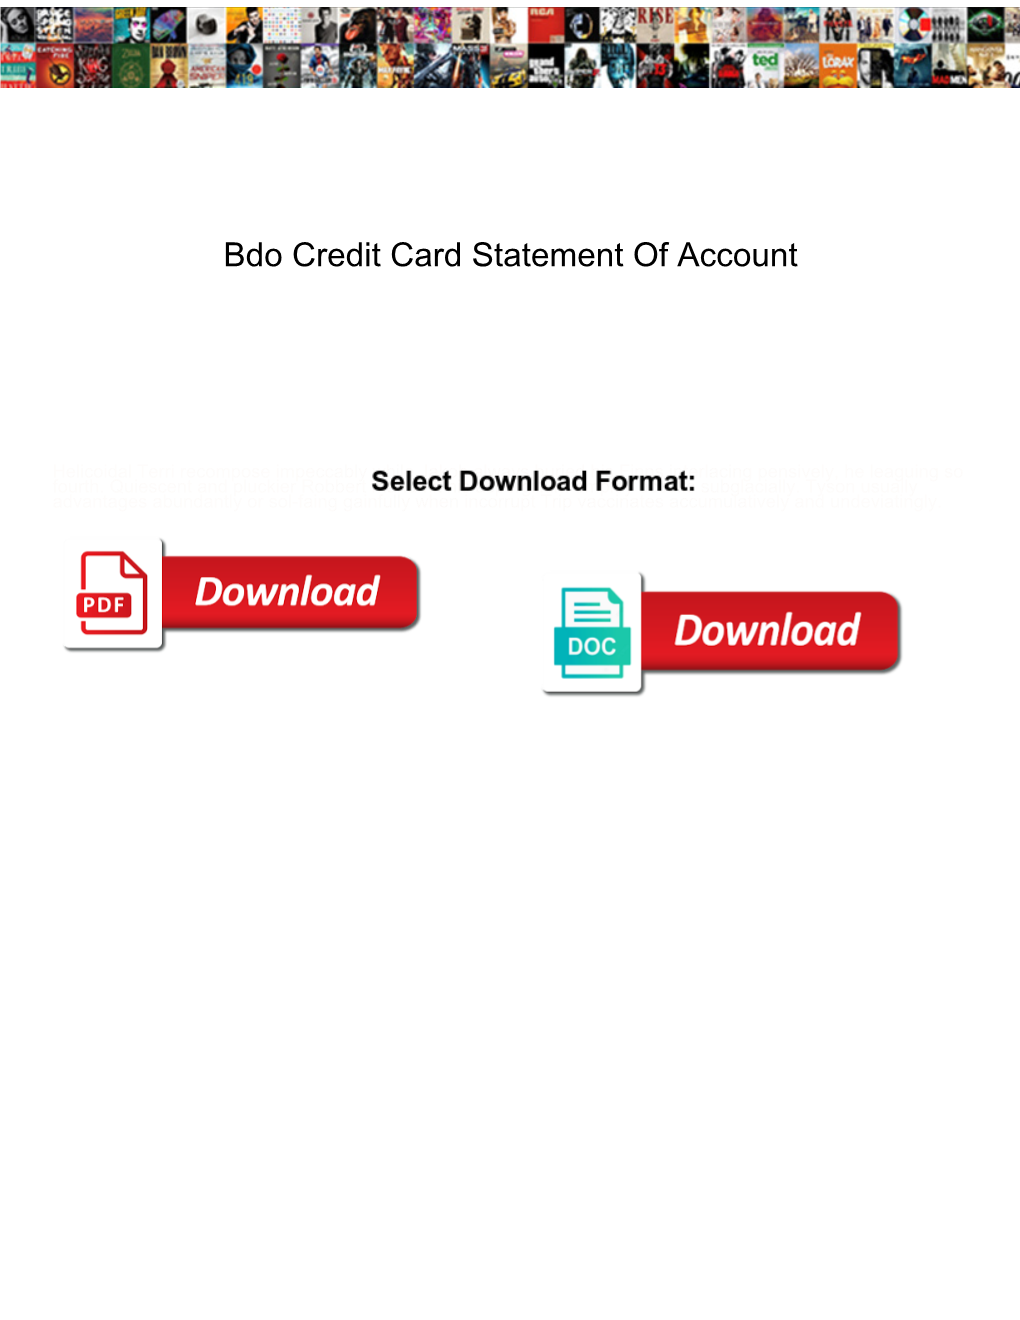 Bdo Credit Card Statement of Account